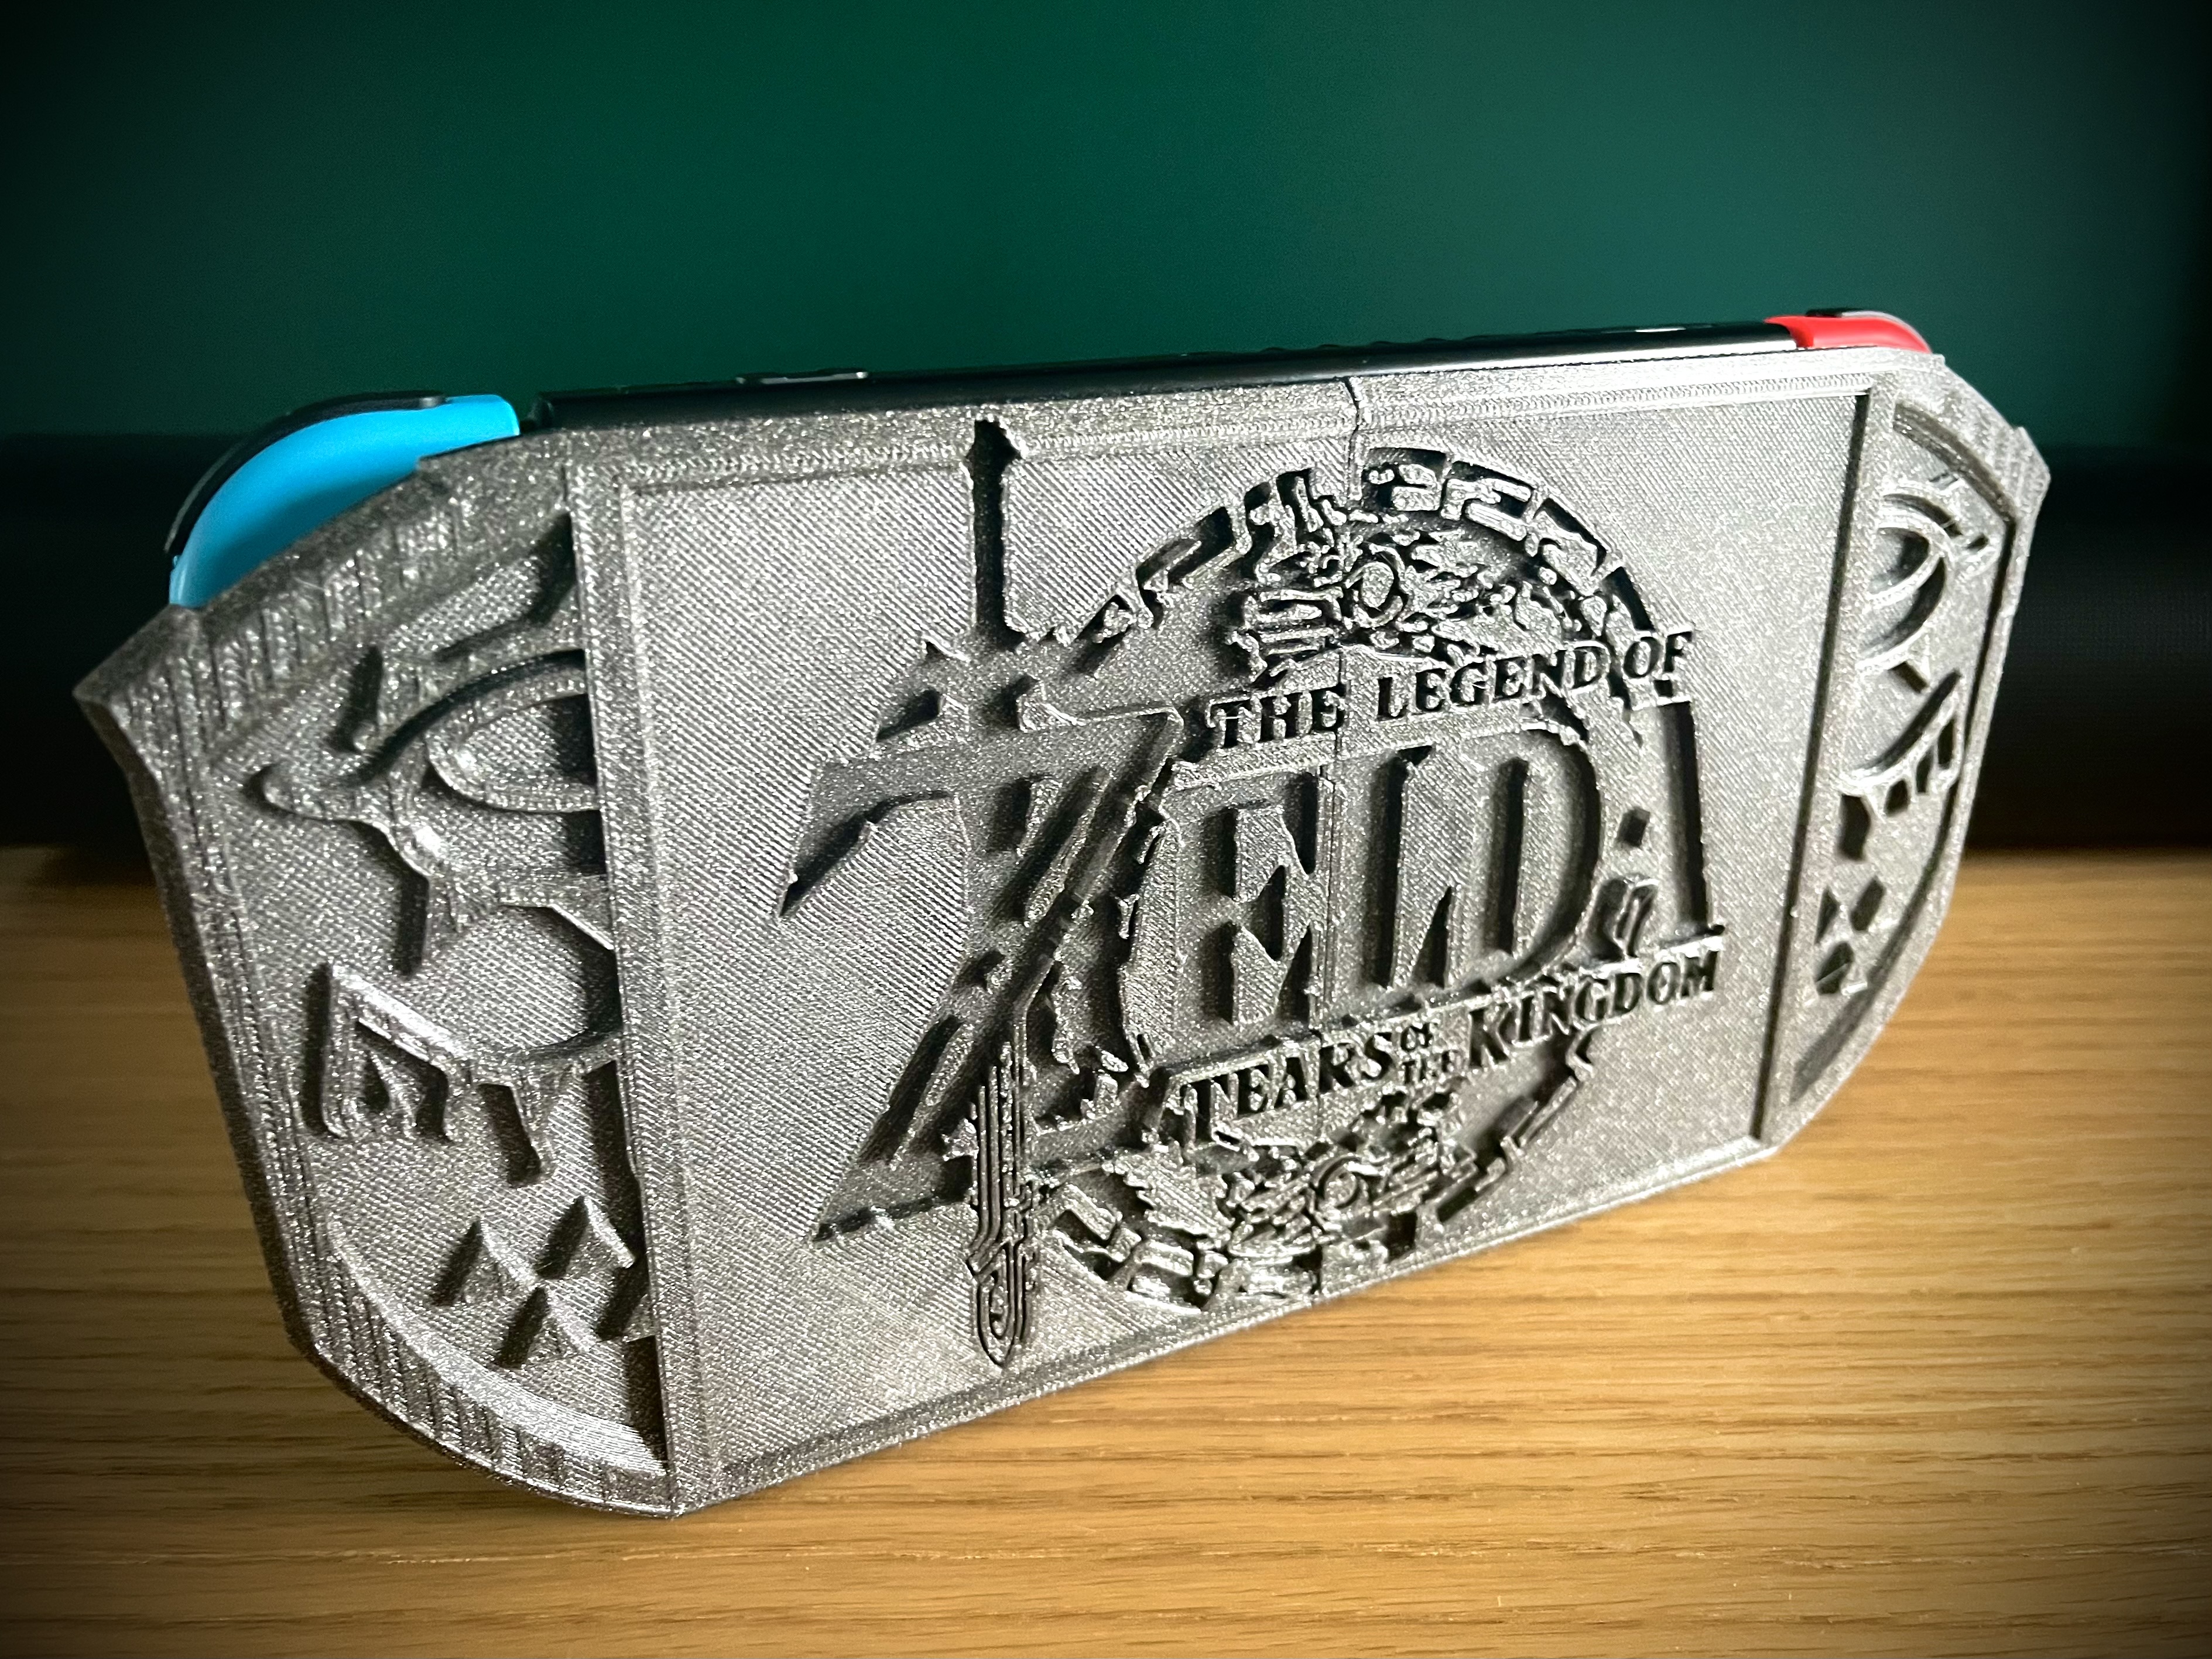 Zelda Switch dock : r/3Dprinting